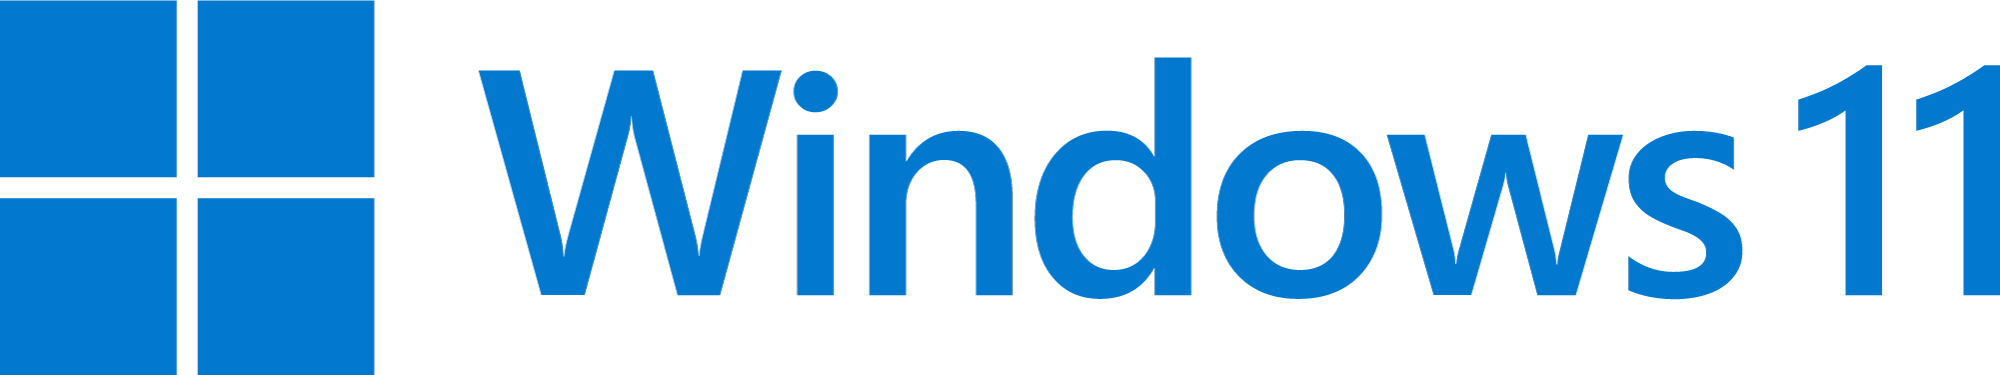 Windows 11 Logo PNG title=